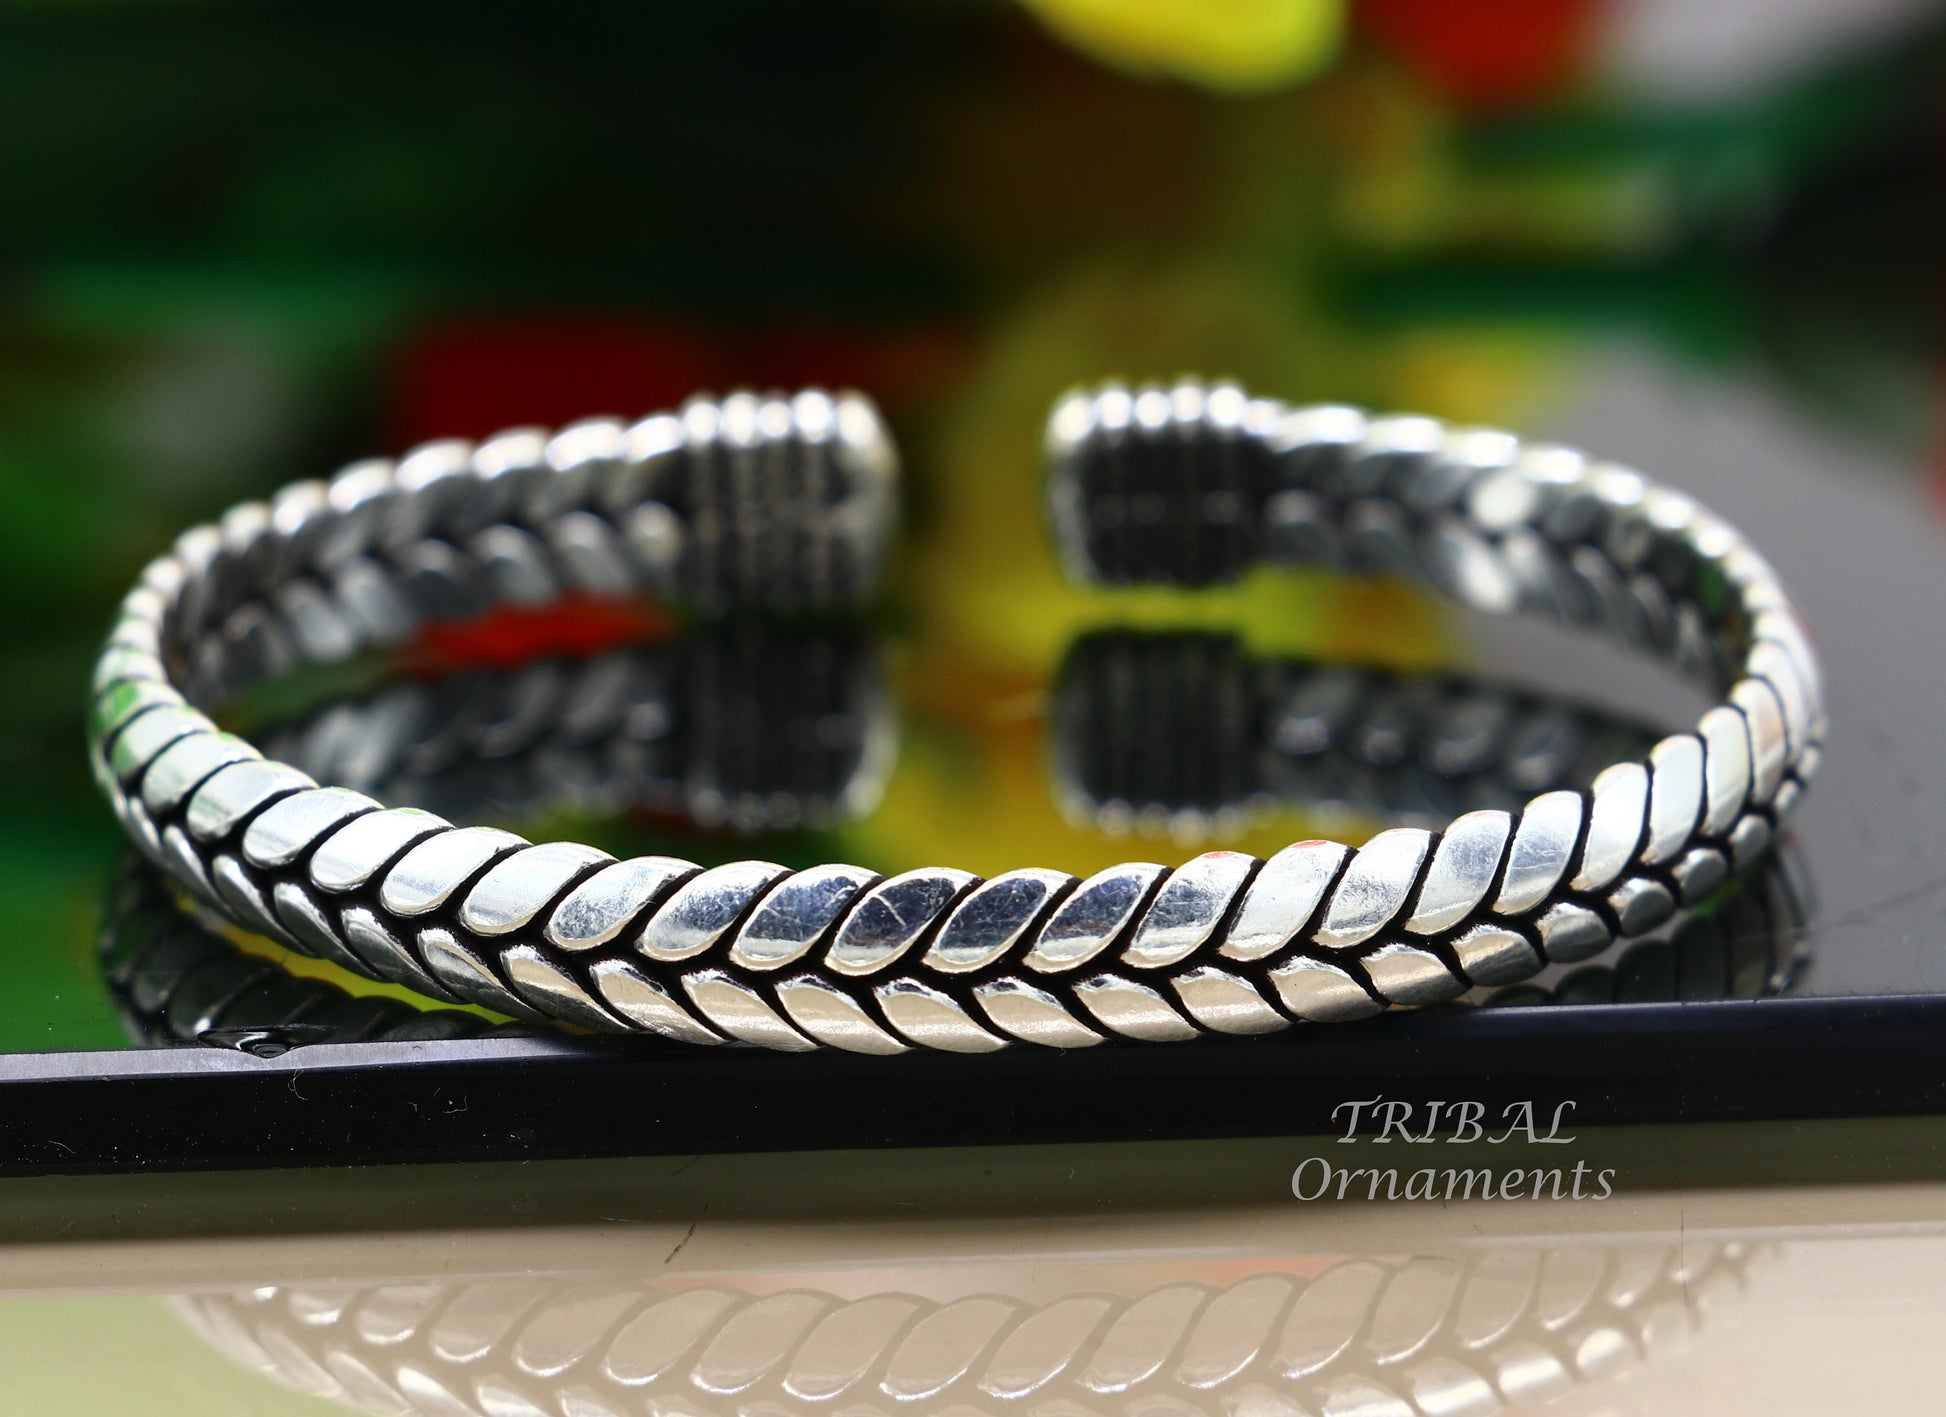 Exclusive custom wheat design 925 sterling silver handmade adjustable cuff kada bangle bracelet, elegant personalized jewelry cuff120 - TRIBAL ORNAMENTS